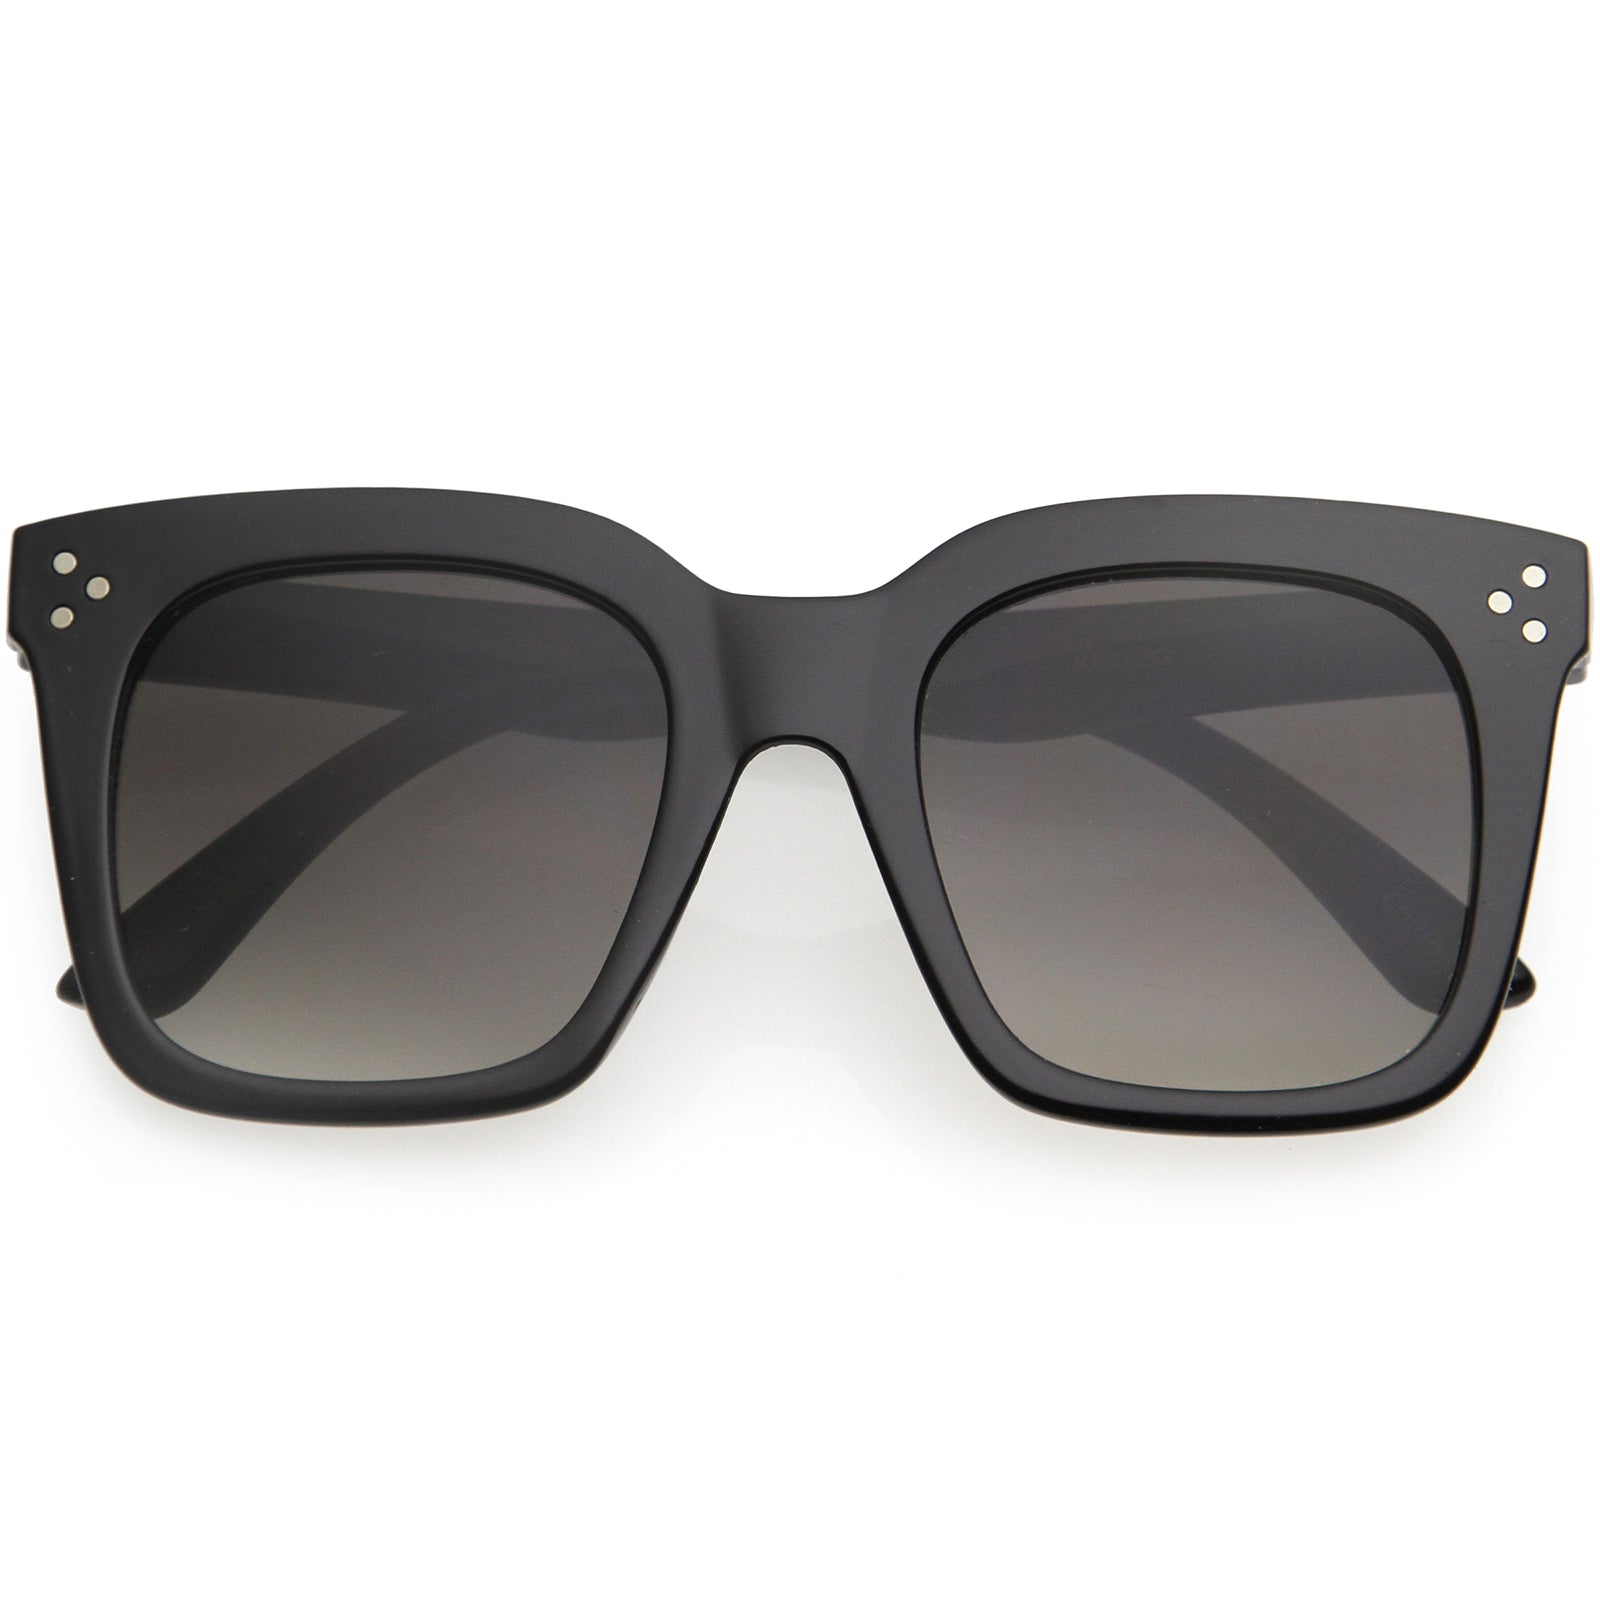 Kids Retro Oversized Square Sunglasses with Flat Lens for Children 45mm